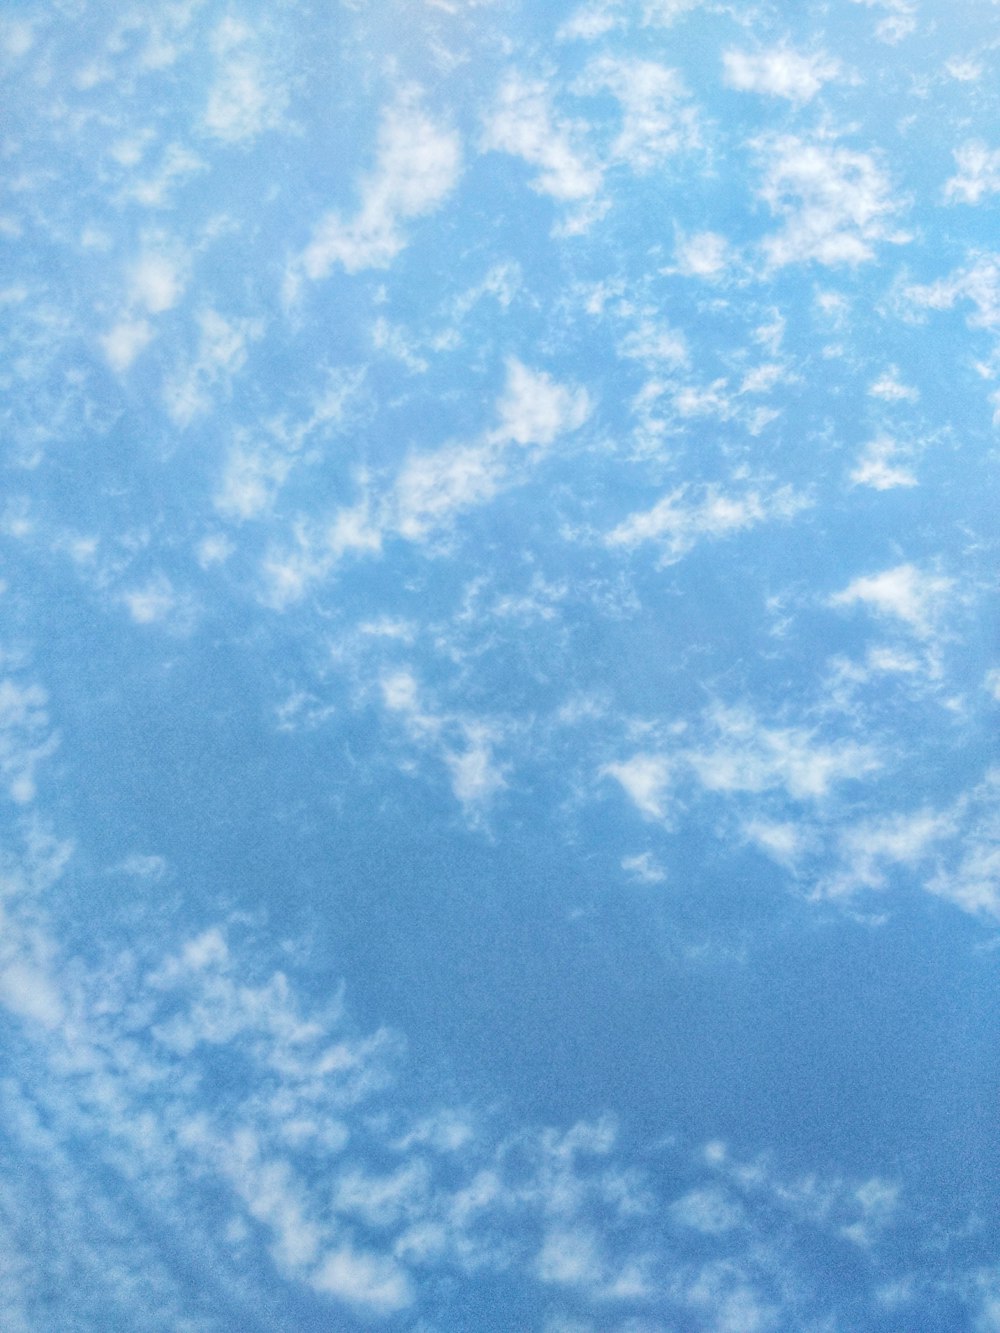 an airplane flying through a blue cloudy sky